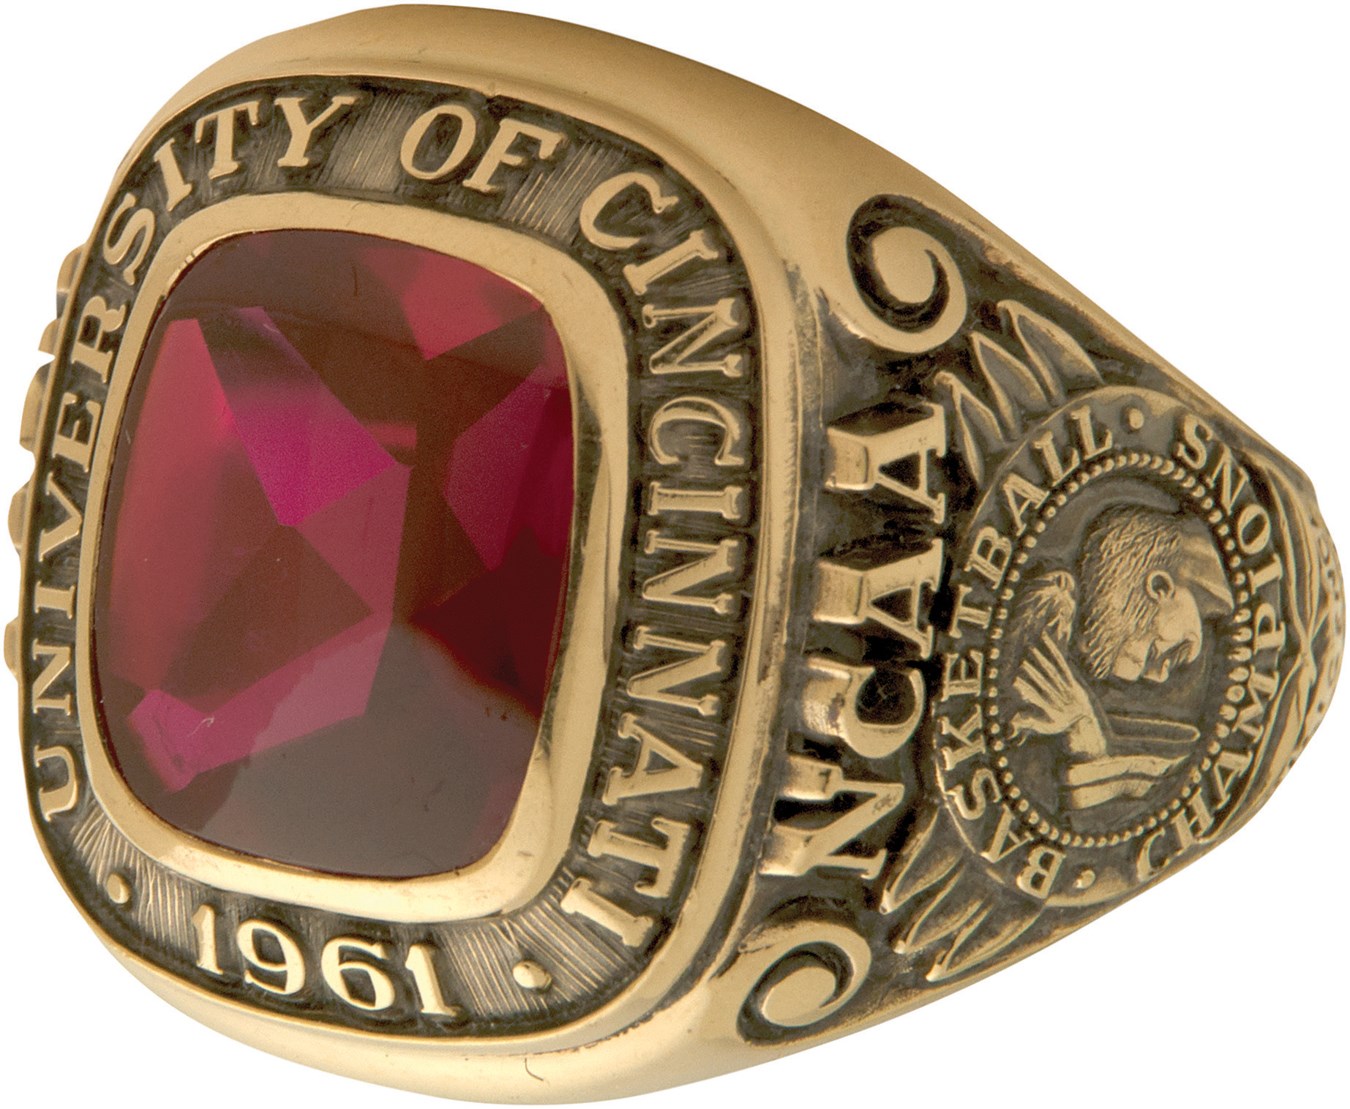 - 1961 Ed Jucker University of Cincinnati National Basketball Championship Ring